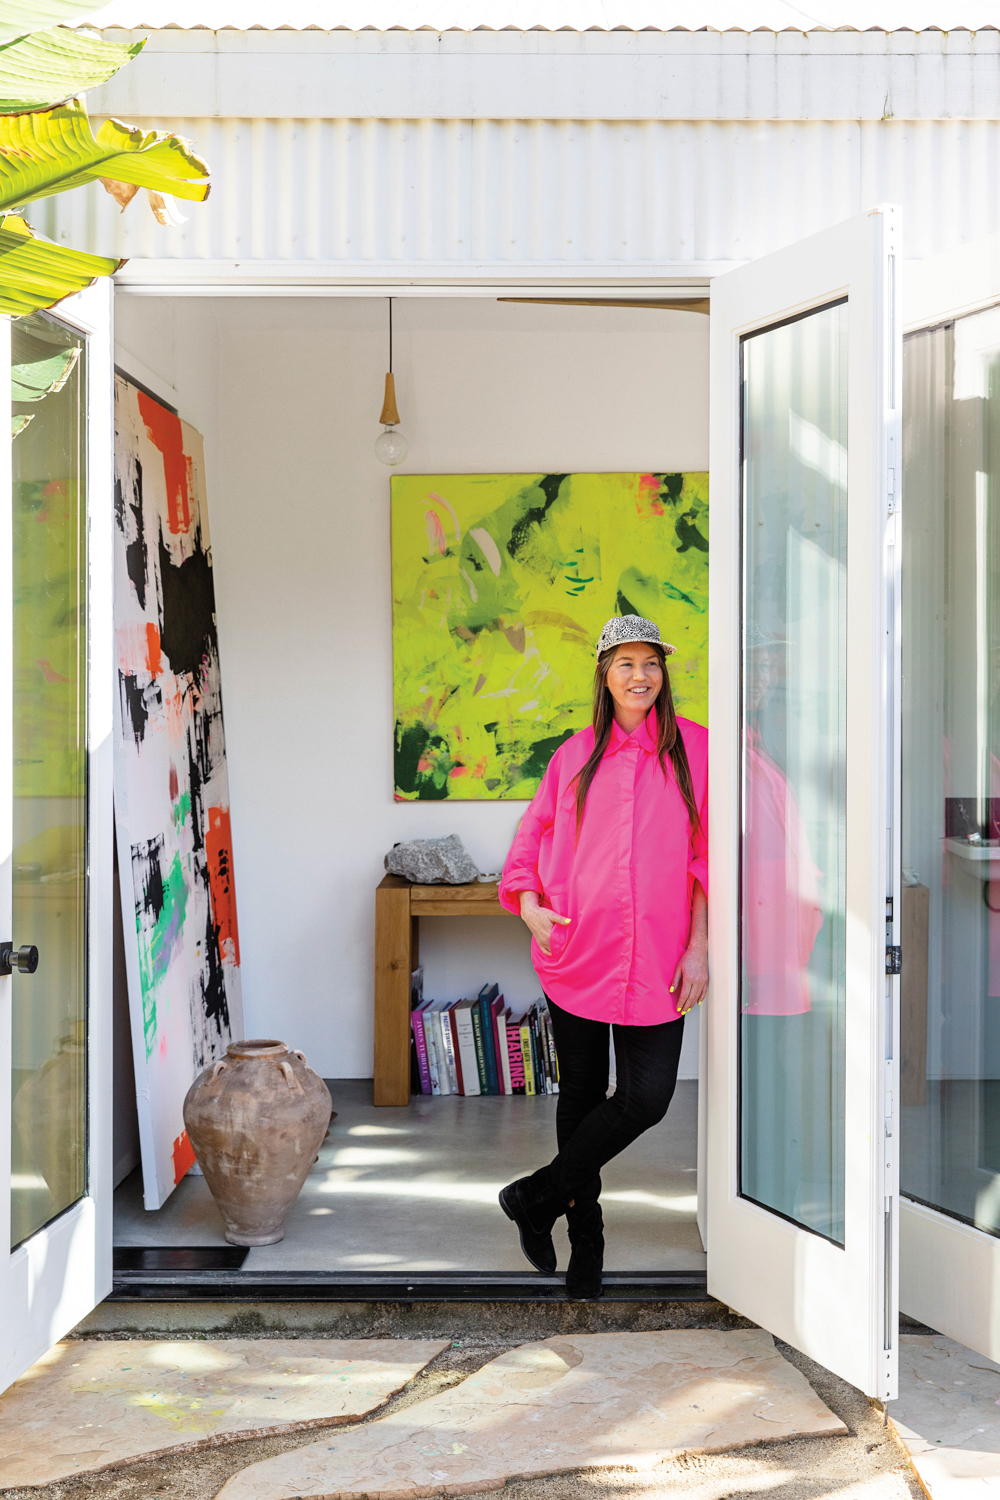 Ali Beletic wearing a pink shirt posing in doorway of art studio 